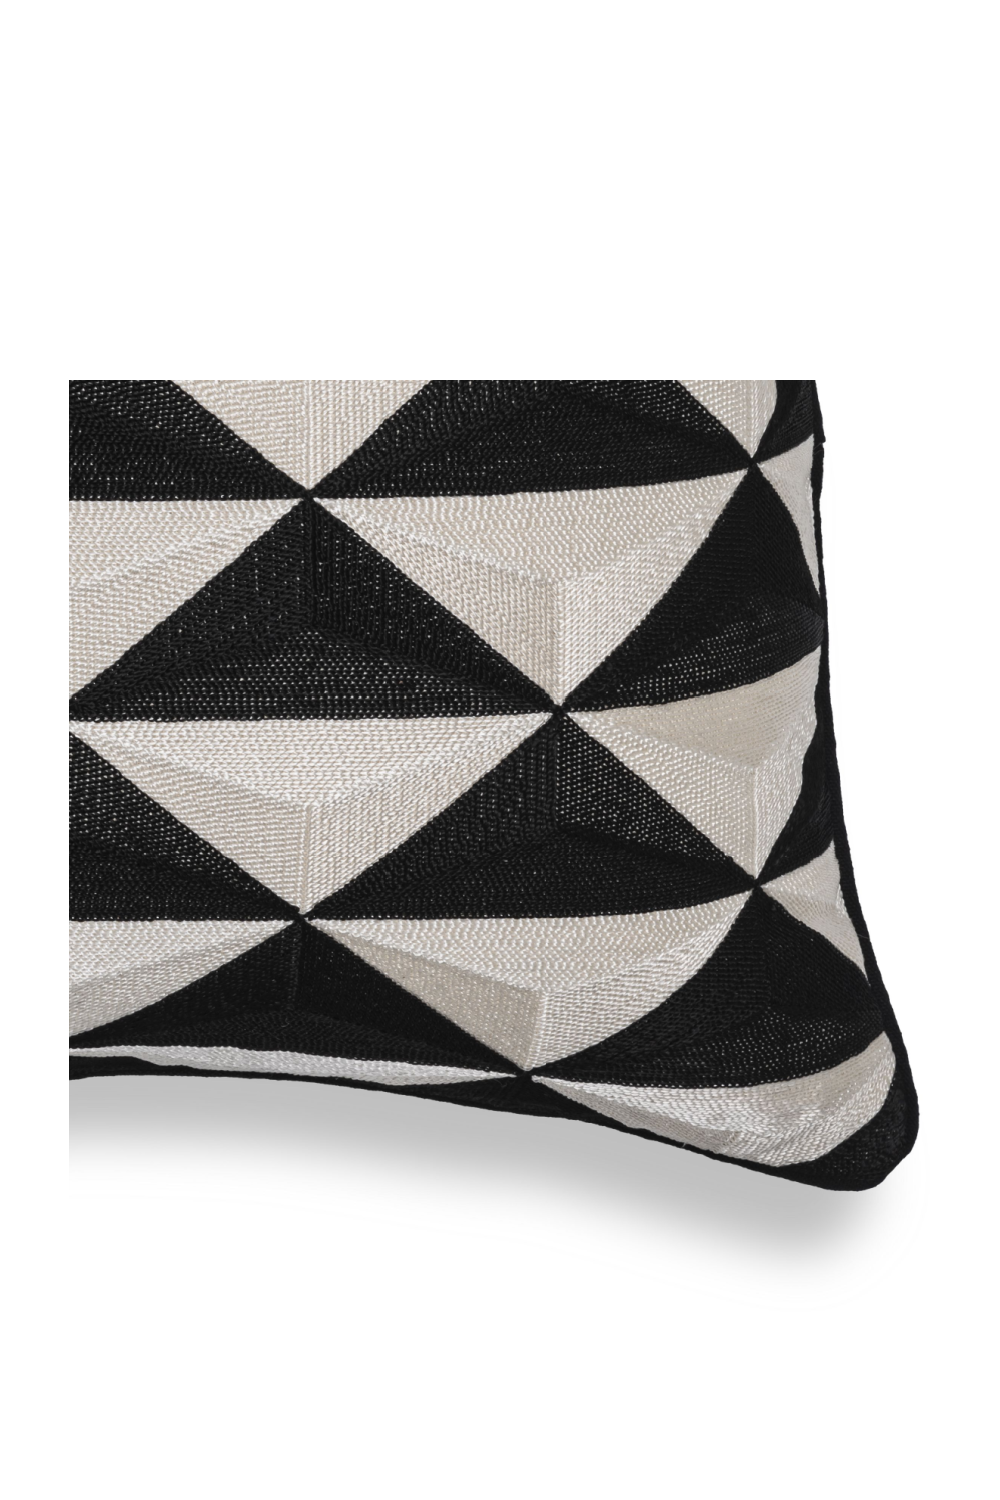 Black & White Decorative Pillow | Eichholtz Mist | OROA.com